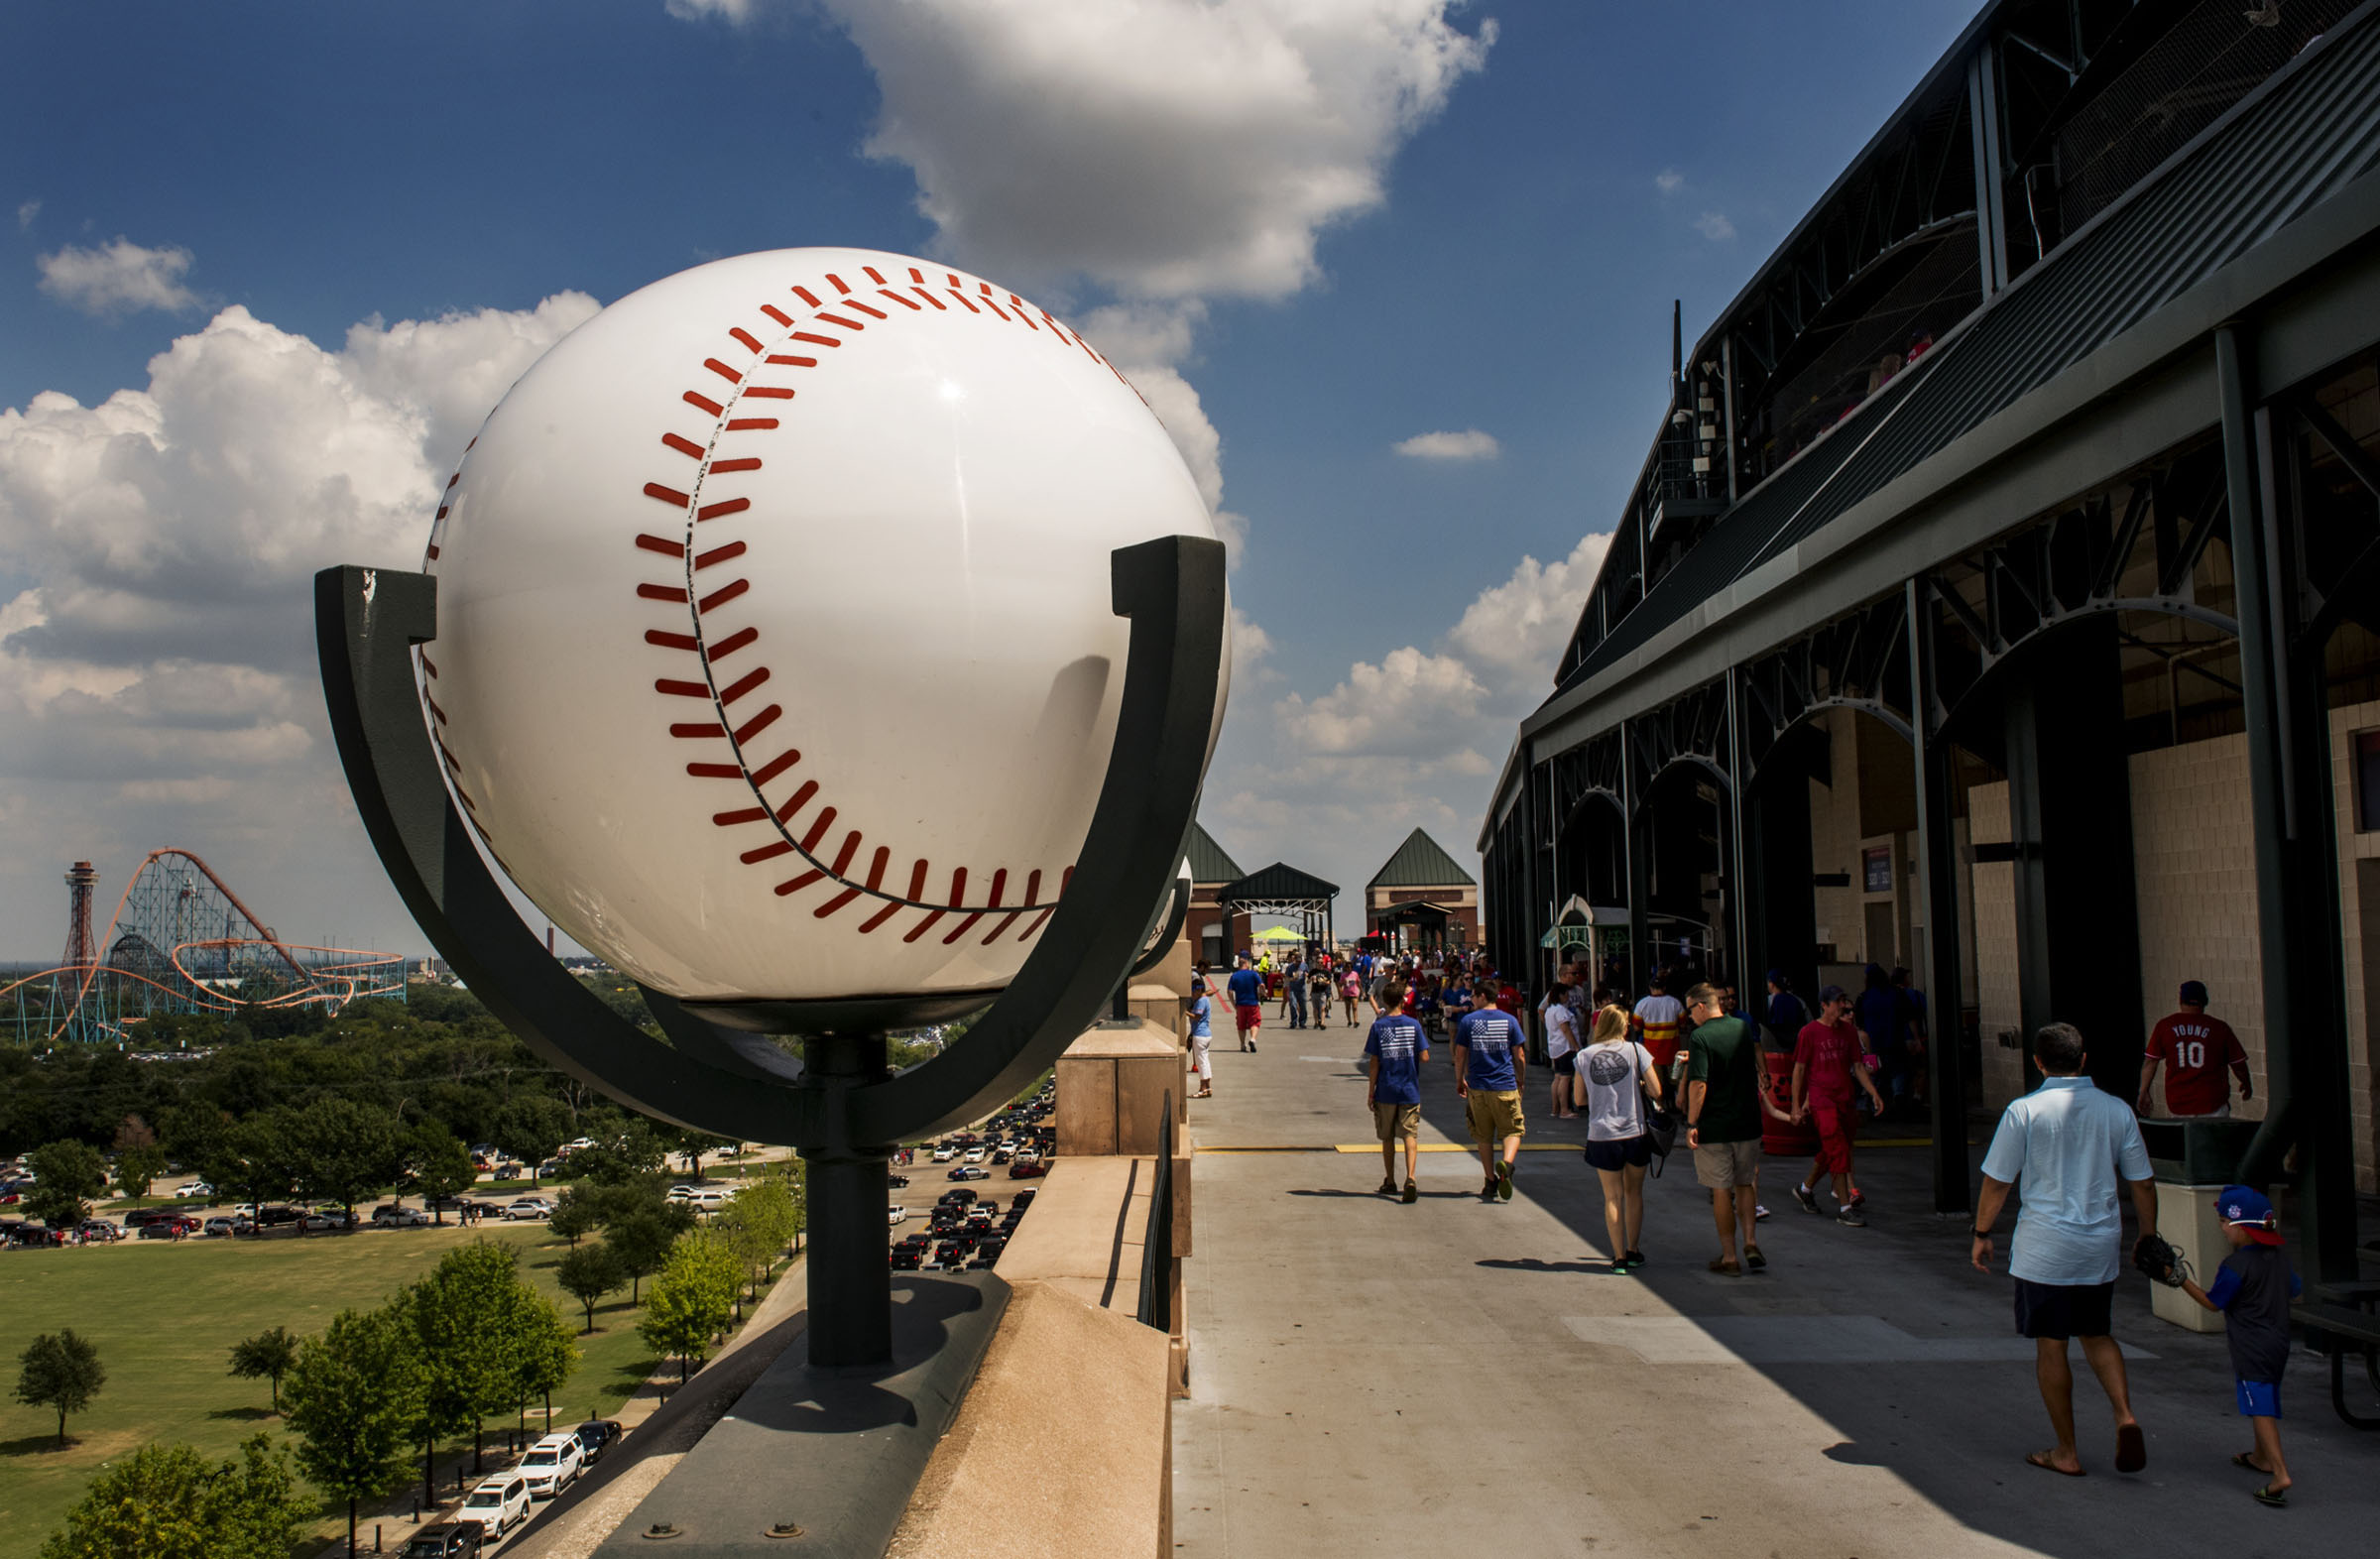 A large baseball sculpture outside of a ballpark